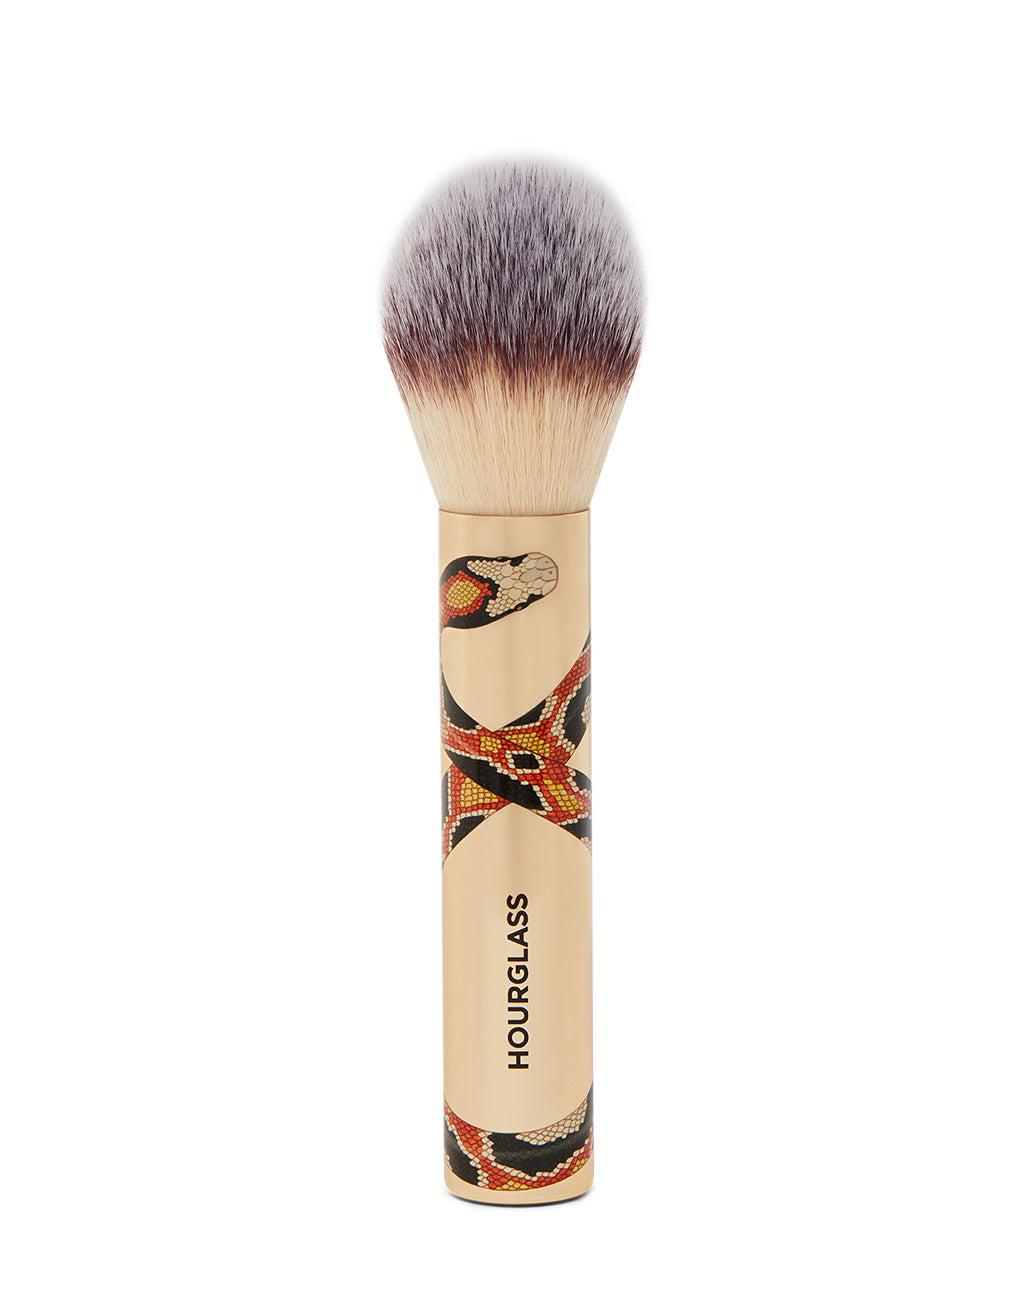 Retractable Makeup Brush - Travel-sized makeup brush - My Women Stuff